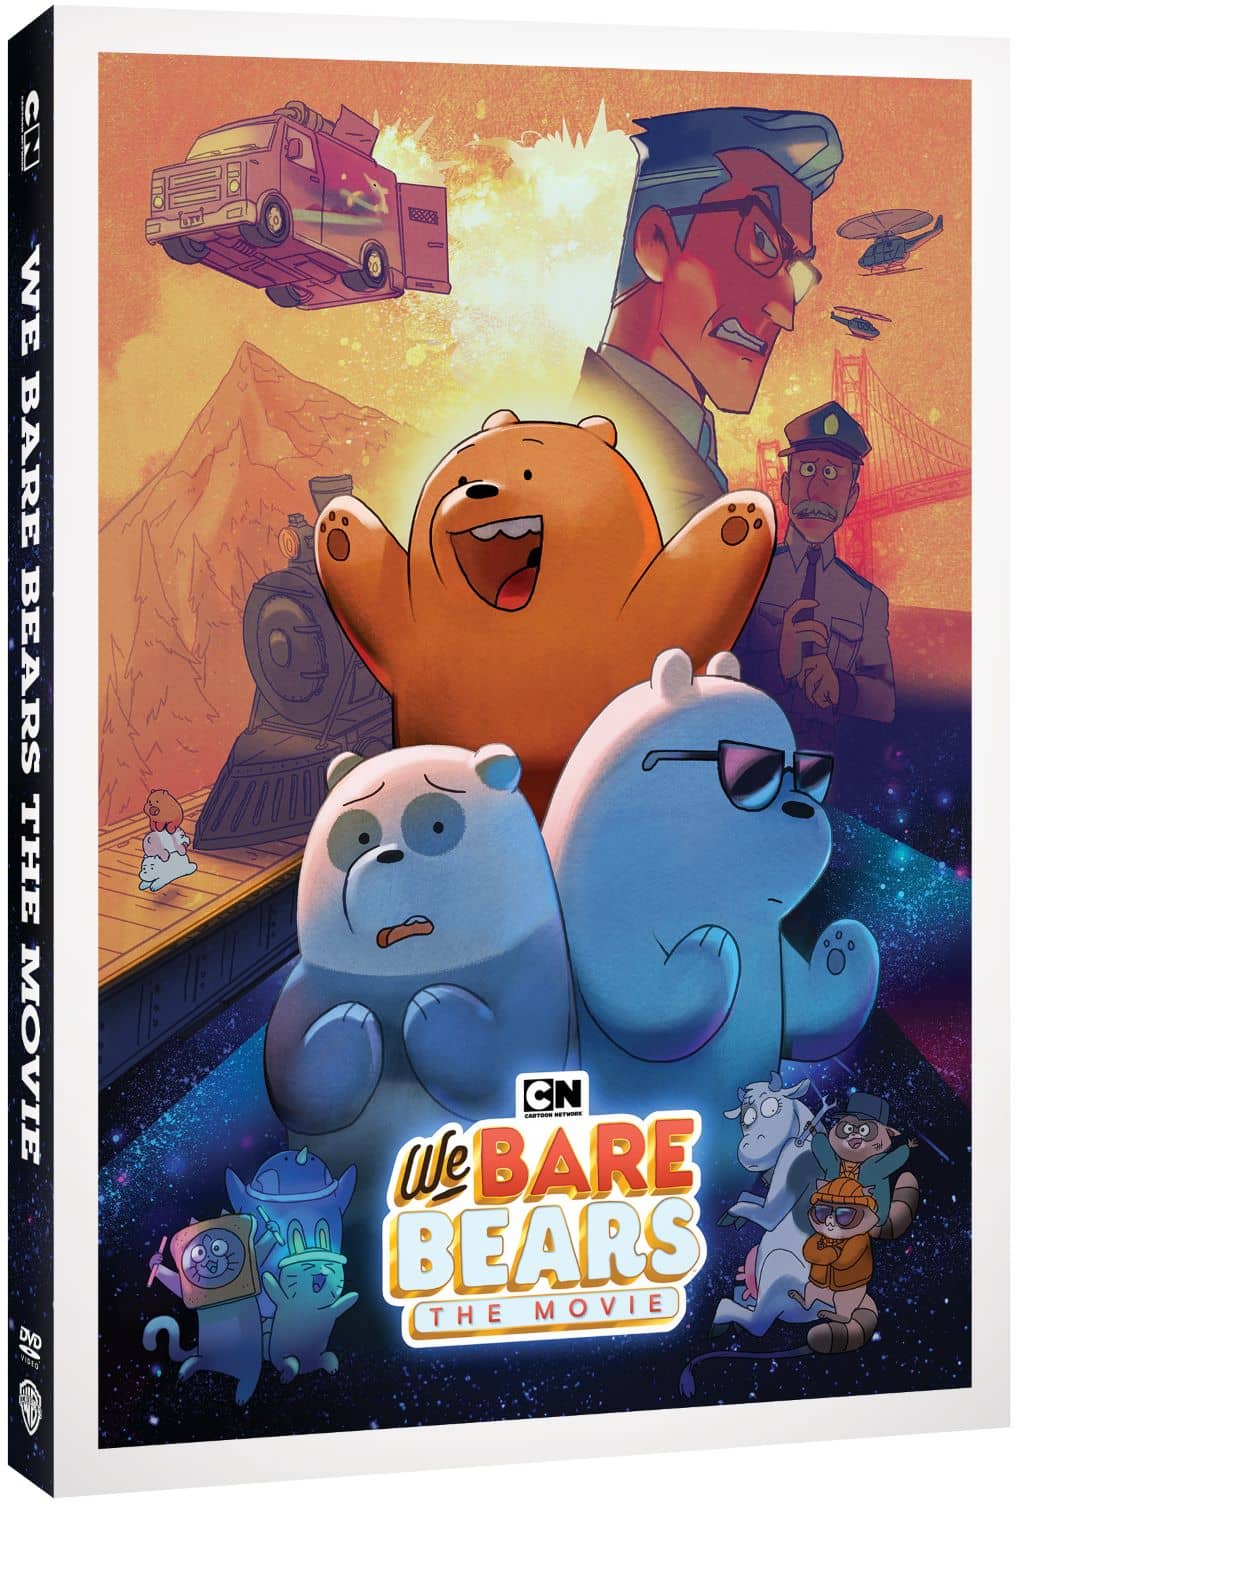 We Bare Bears The Movie